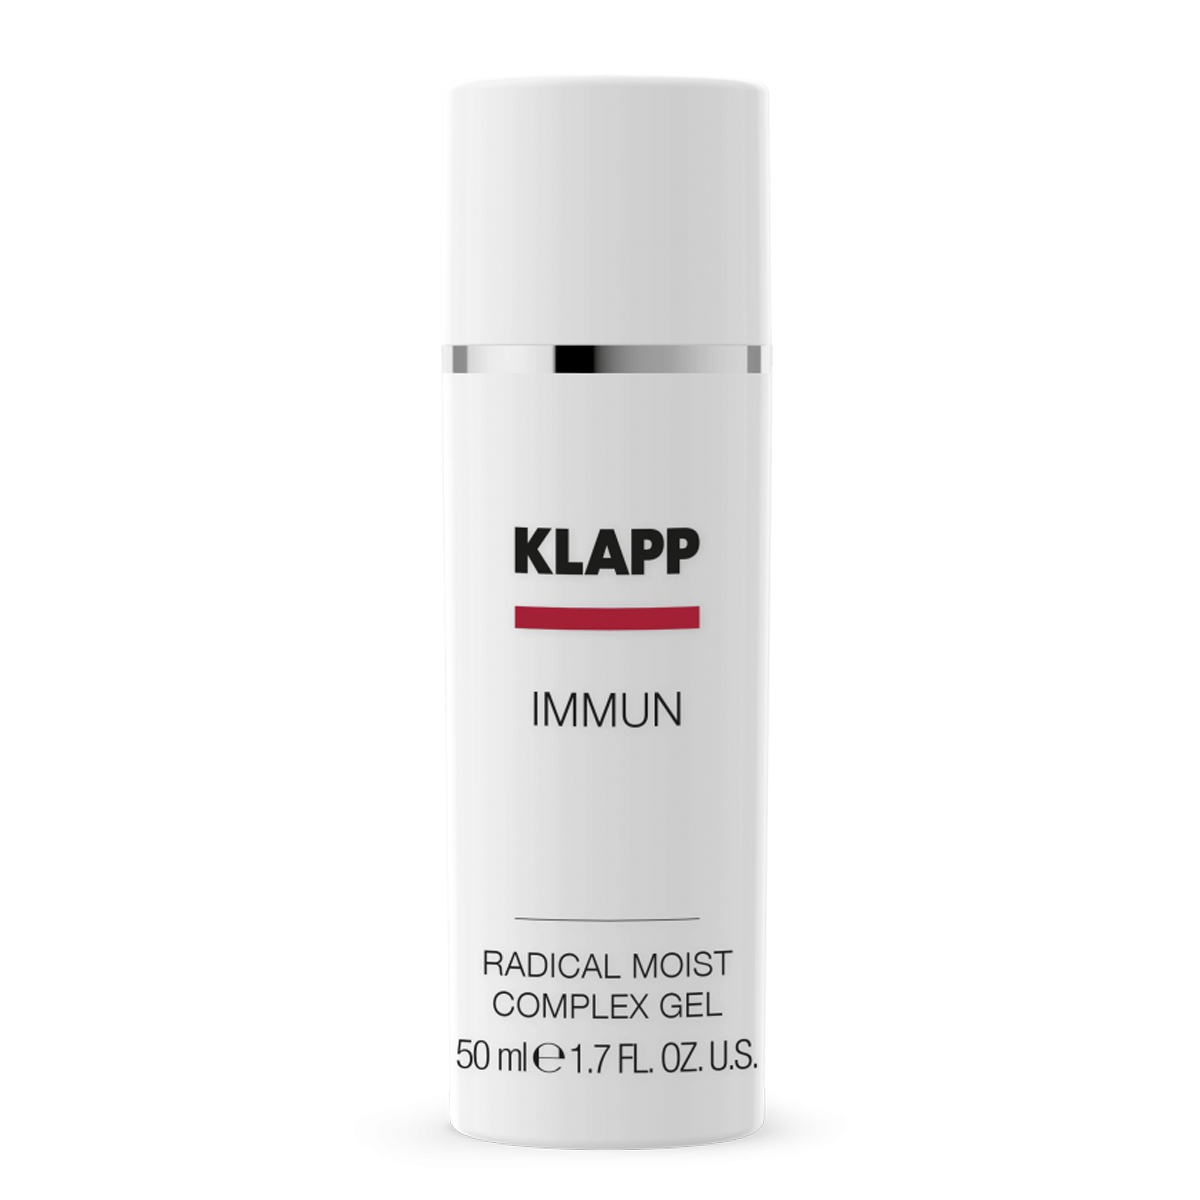 KLAPP Immun Radical Moist Complex Gel 50 ml